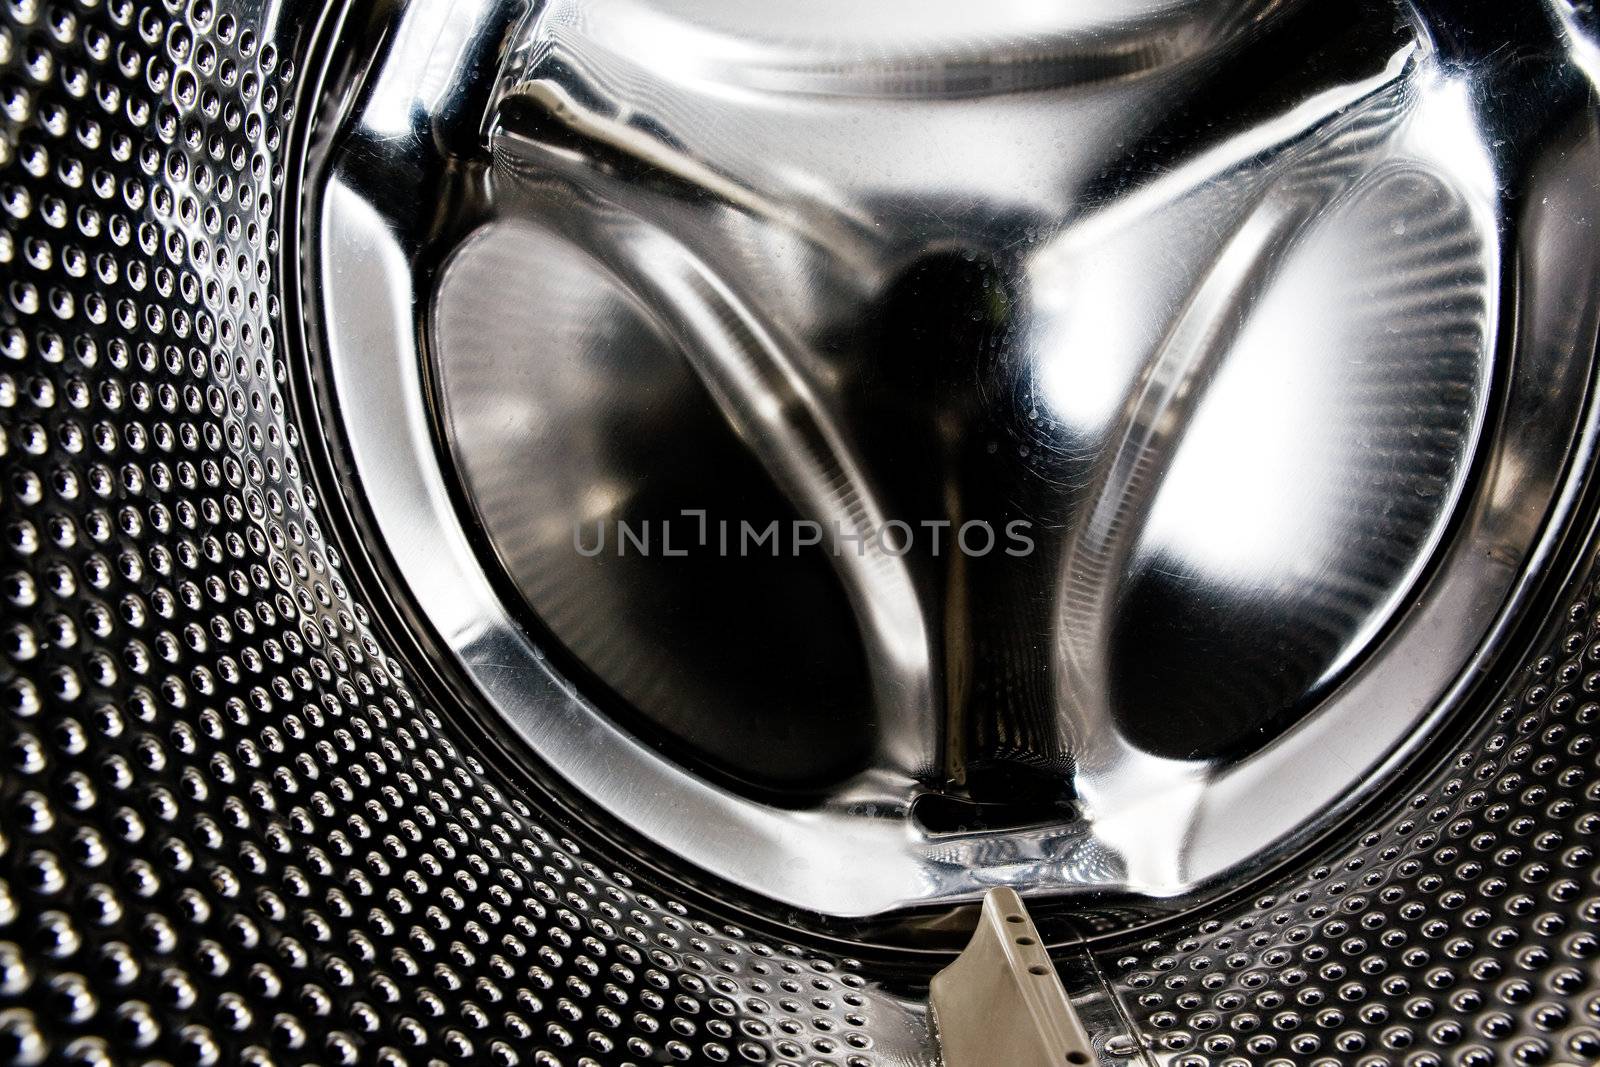 Interior of a washing machine